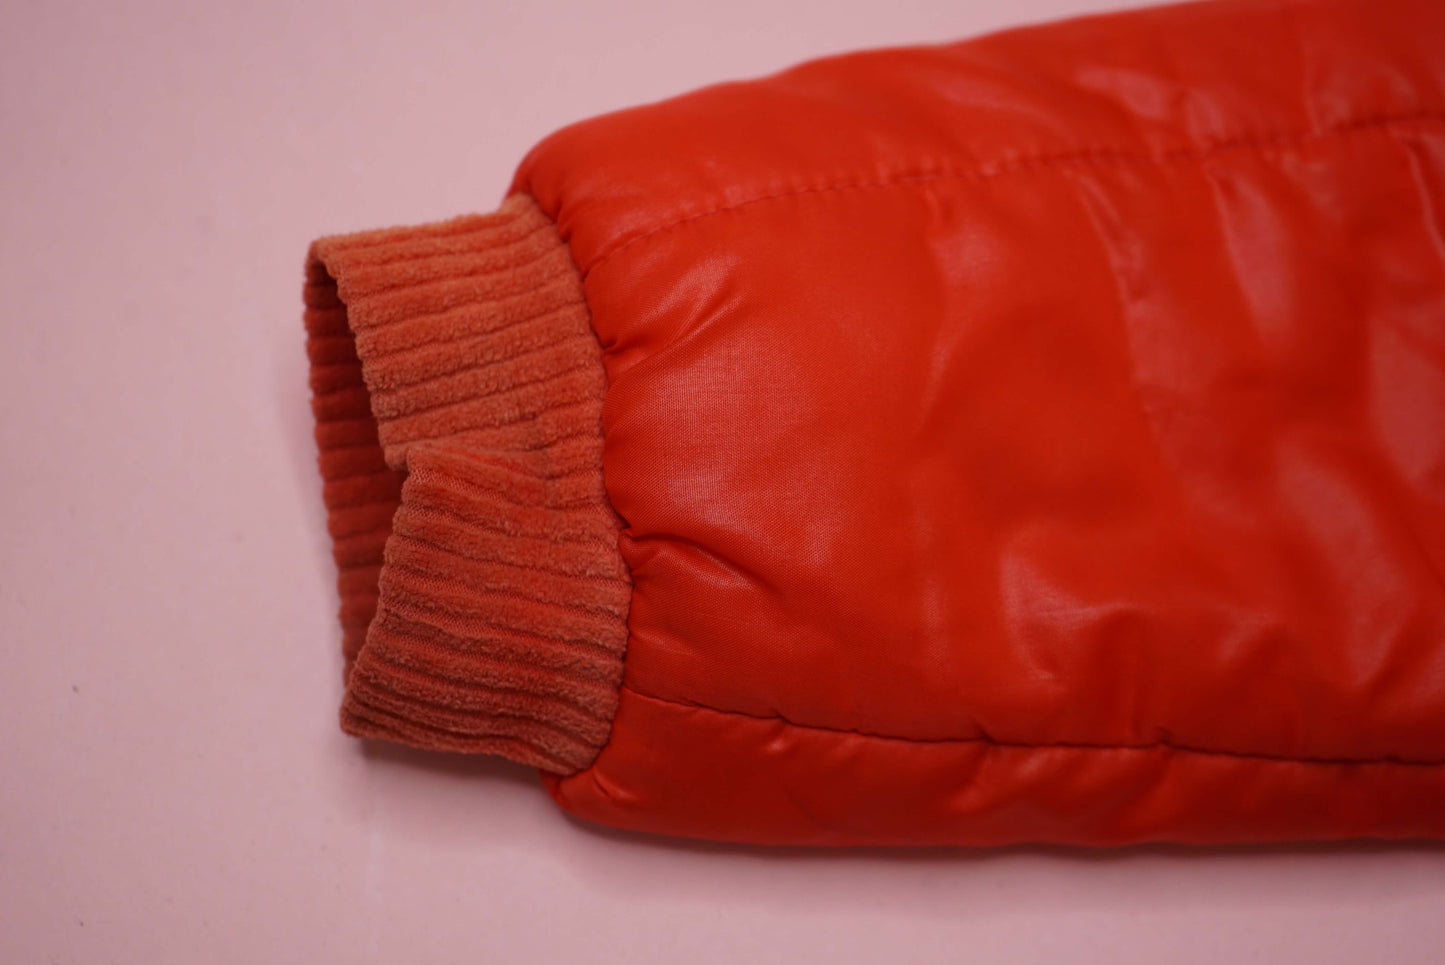 Vintage Retro Red Vintage Puffer Jacket Ski Zip Up Winter Jacket Size S-M 80s 90s Style